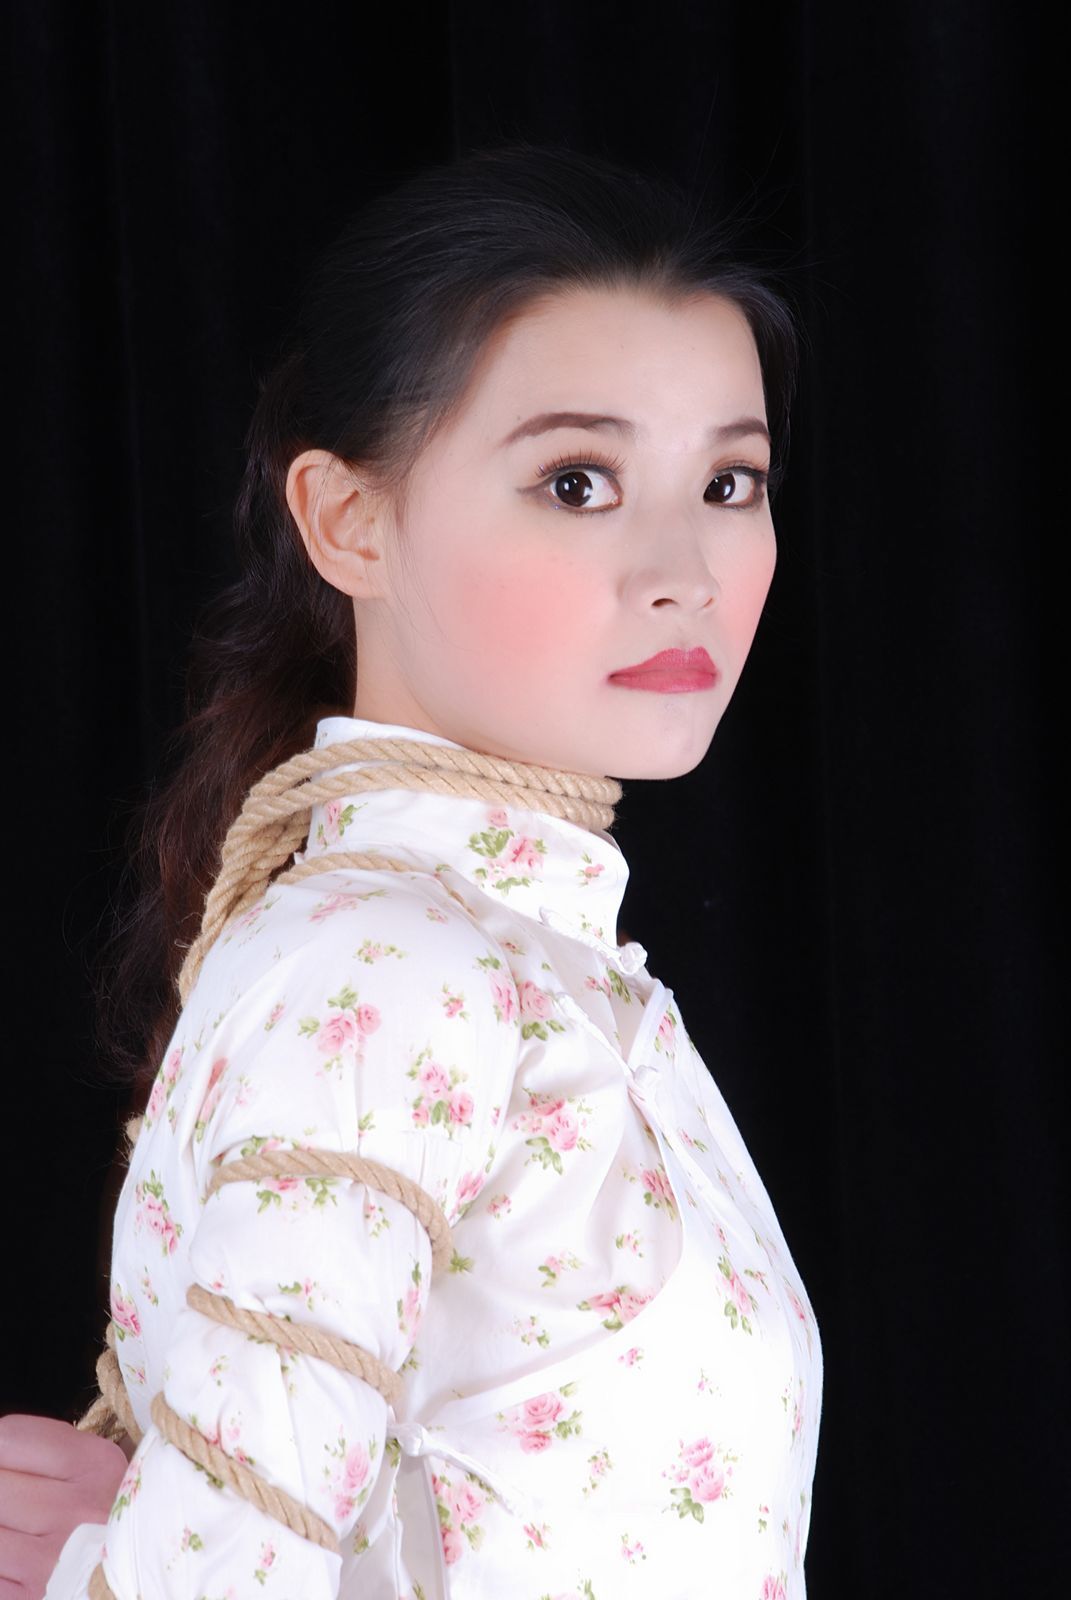 Jiaxin, a captive girl student